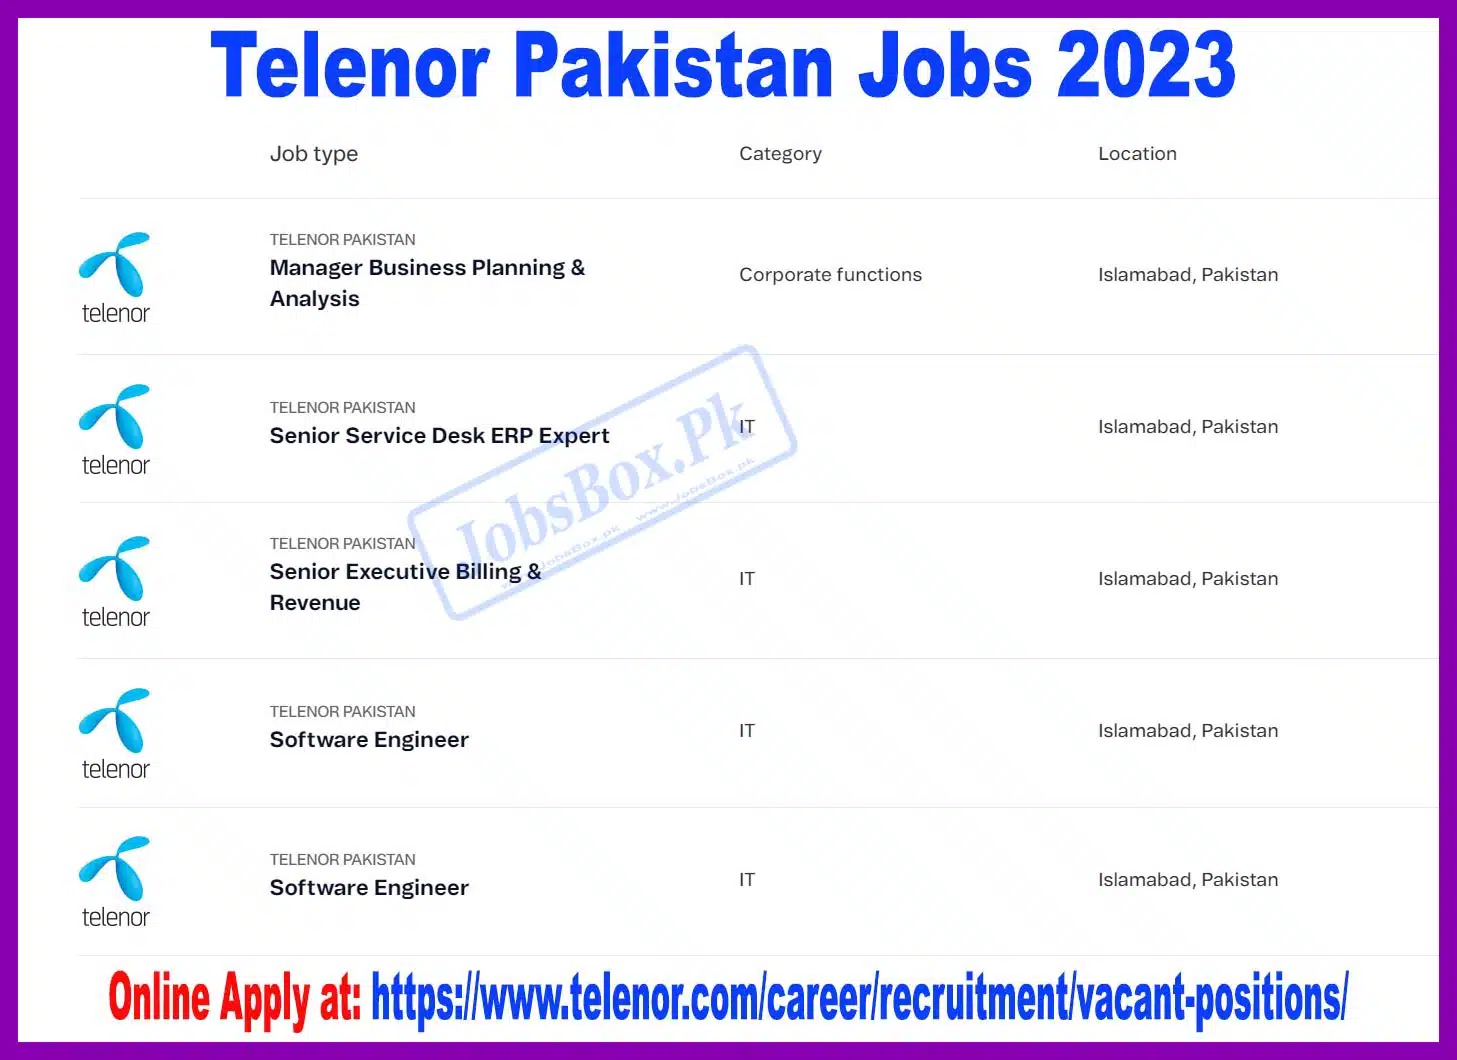 Telenor Pakistan Jobs 2023 | Apply Online at www.telenor.com